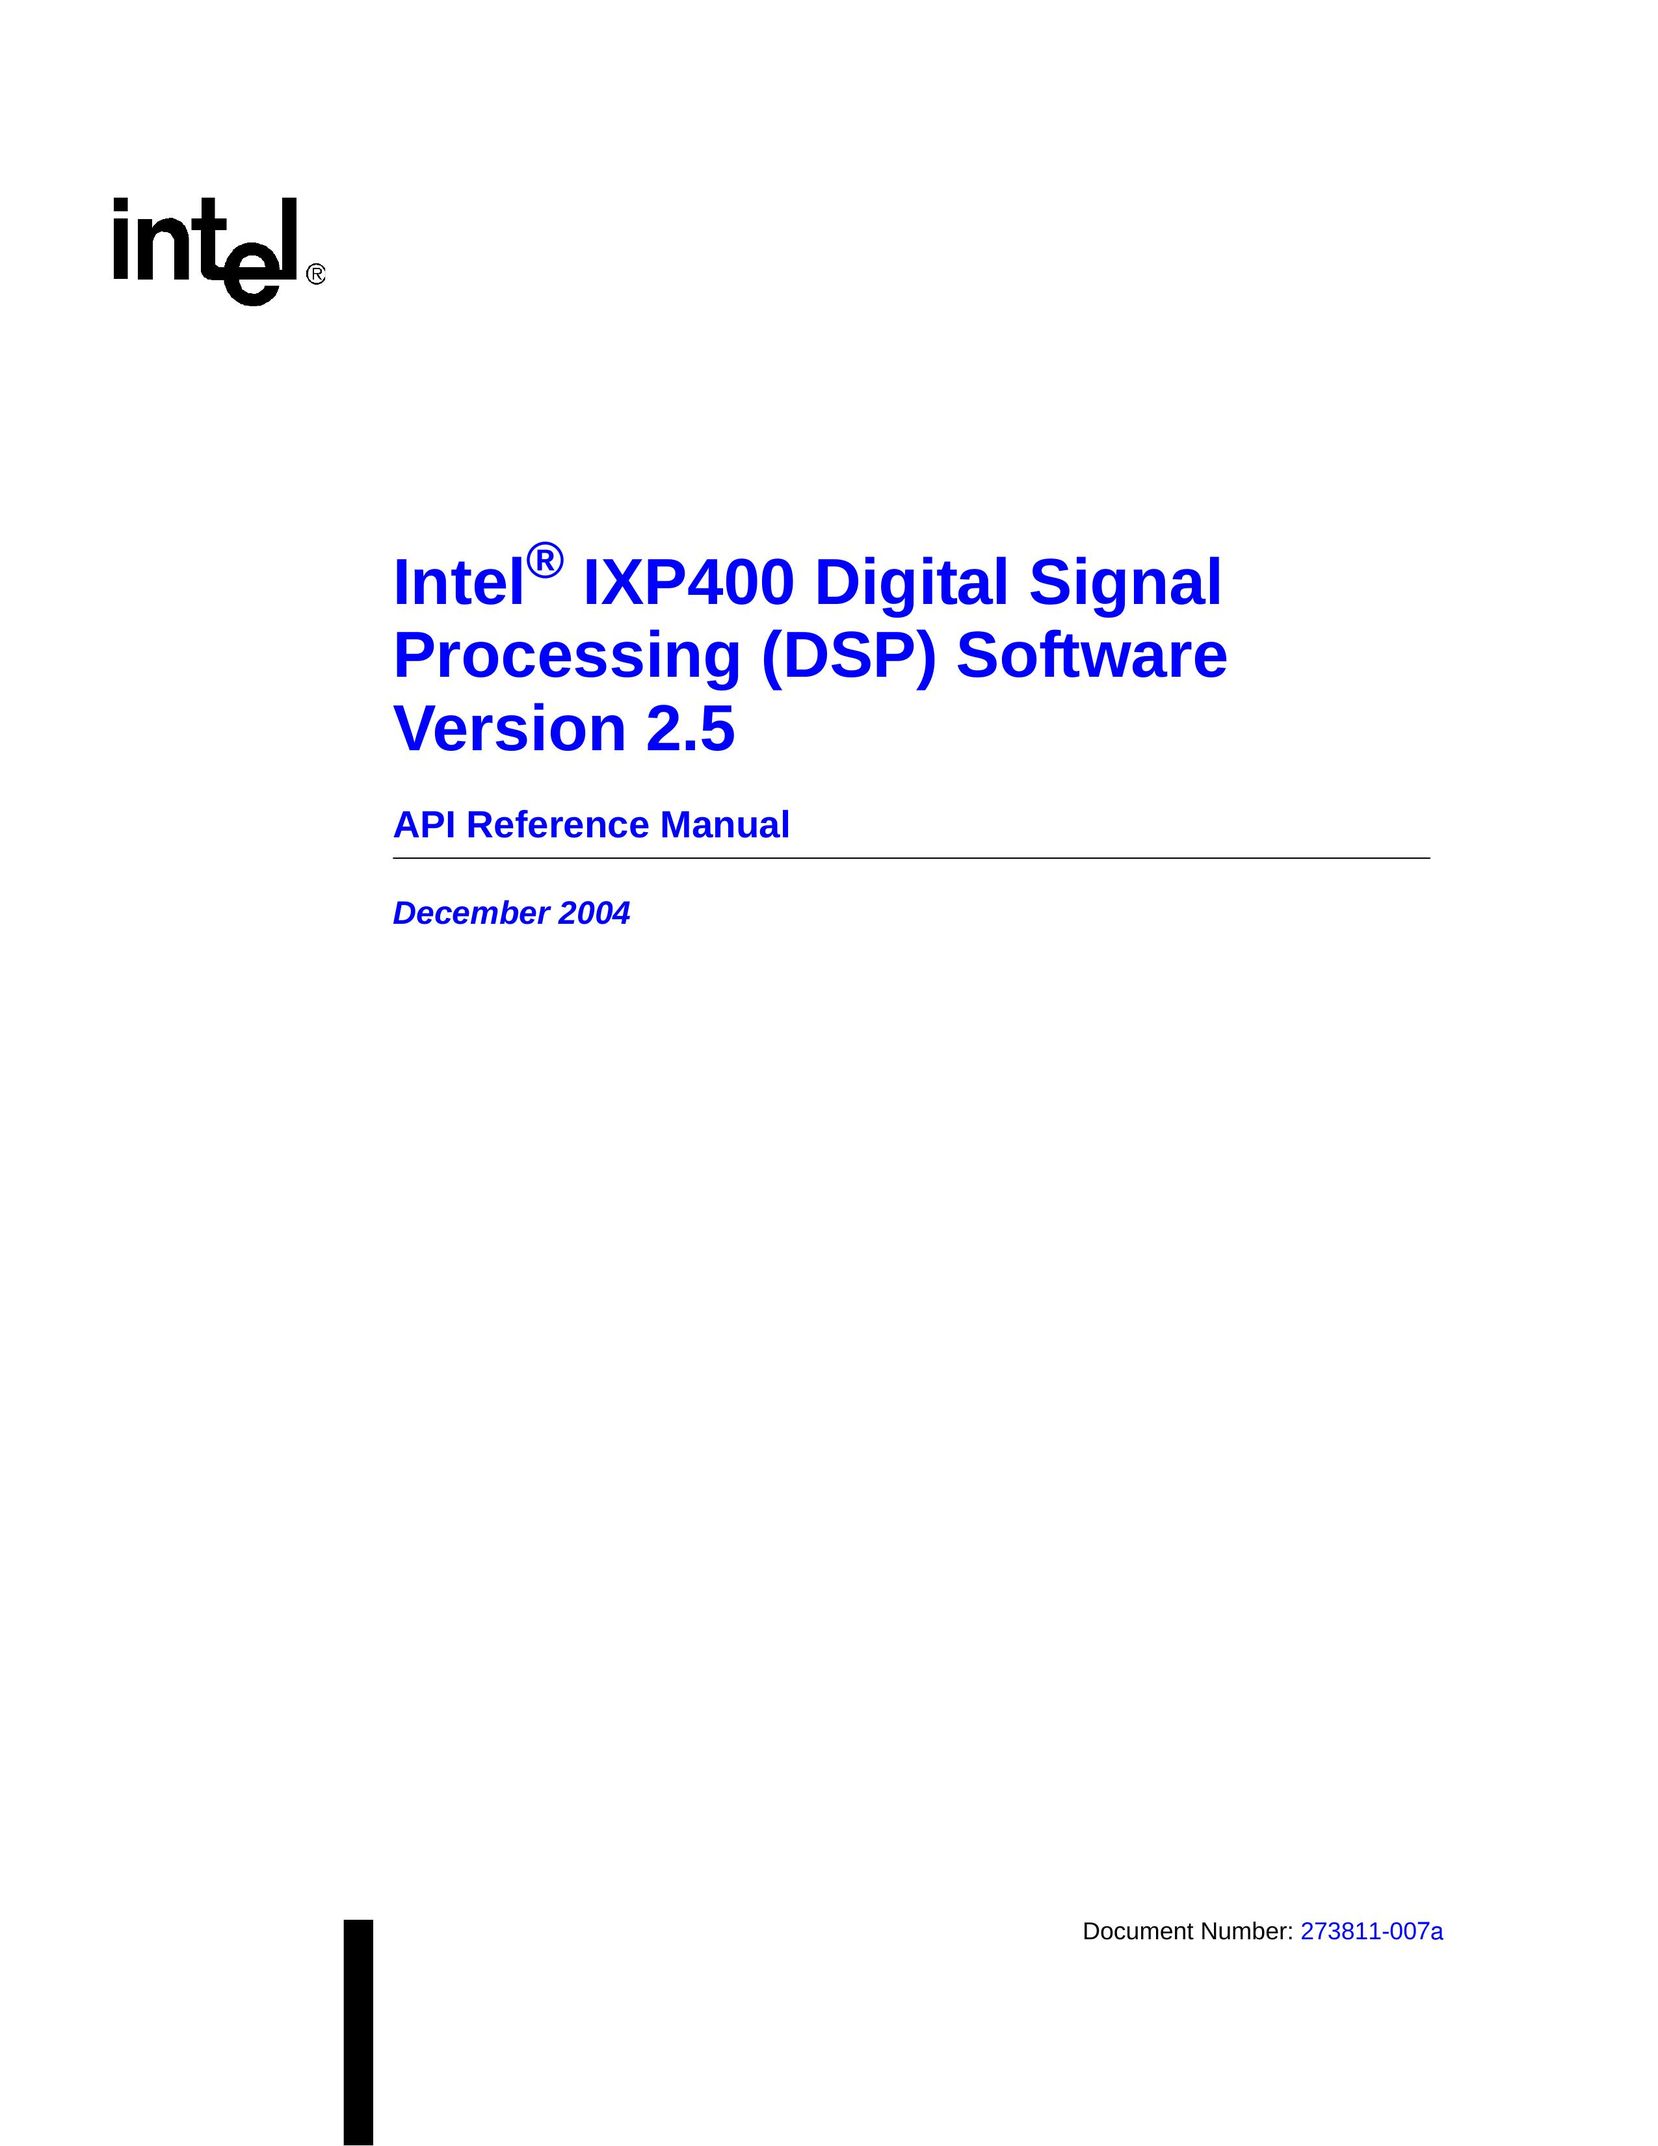 Intel IXP400 Car Stereo System User Manual